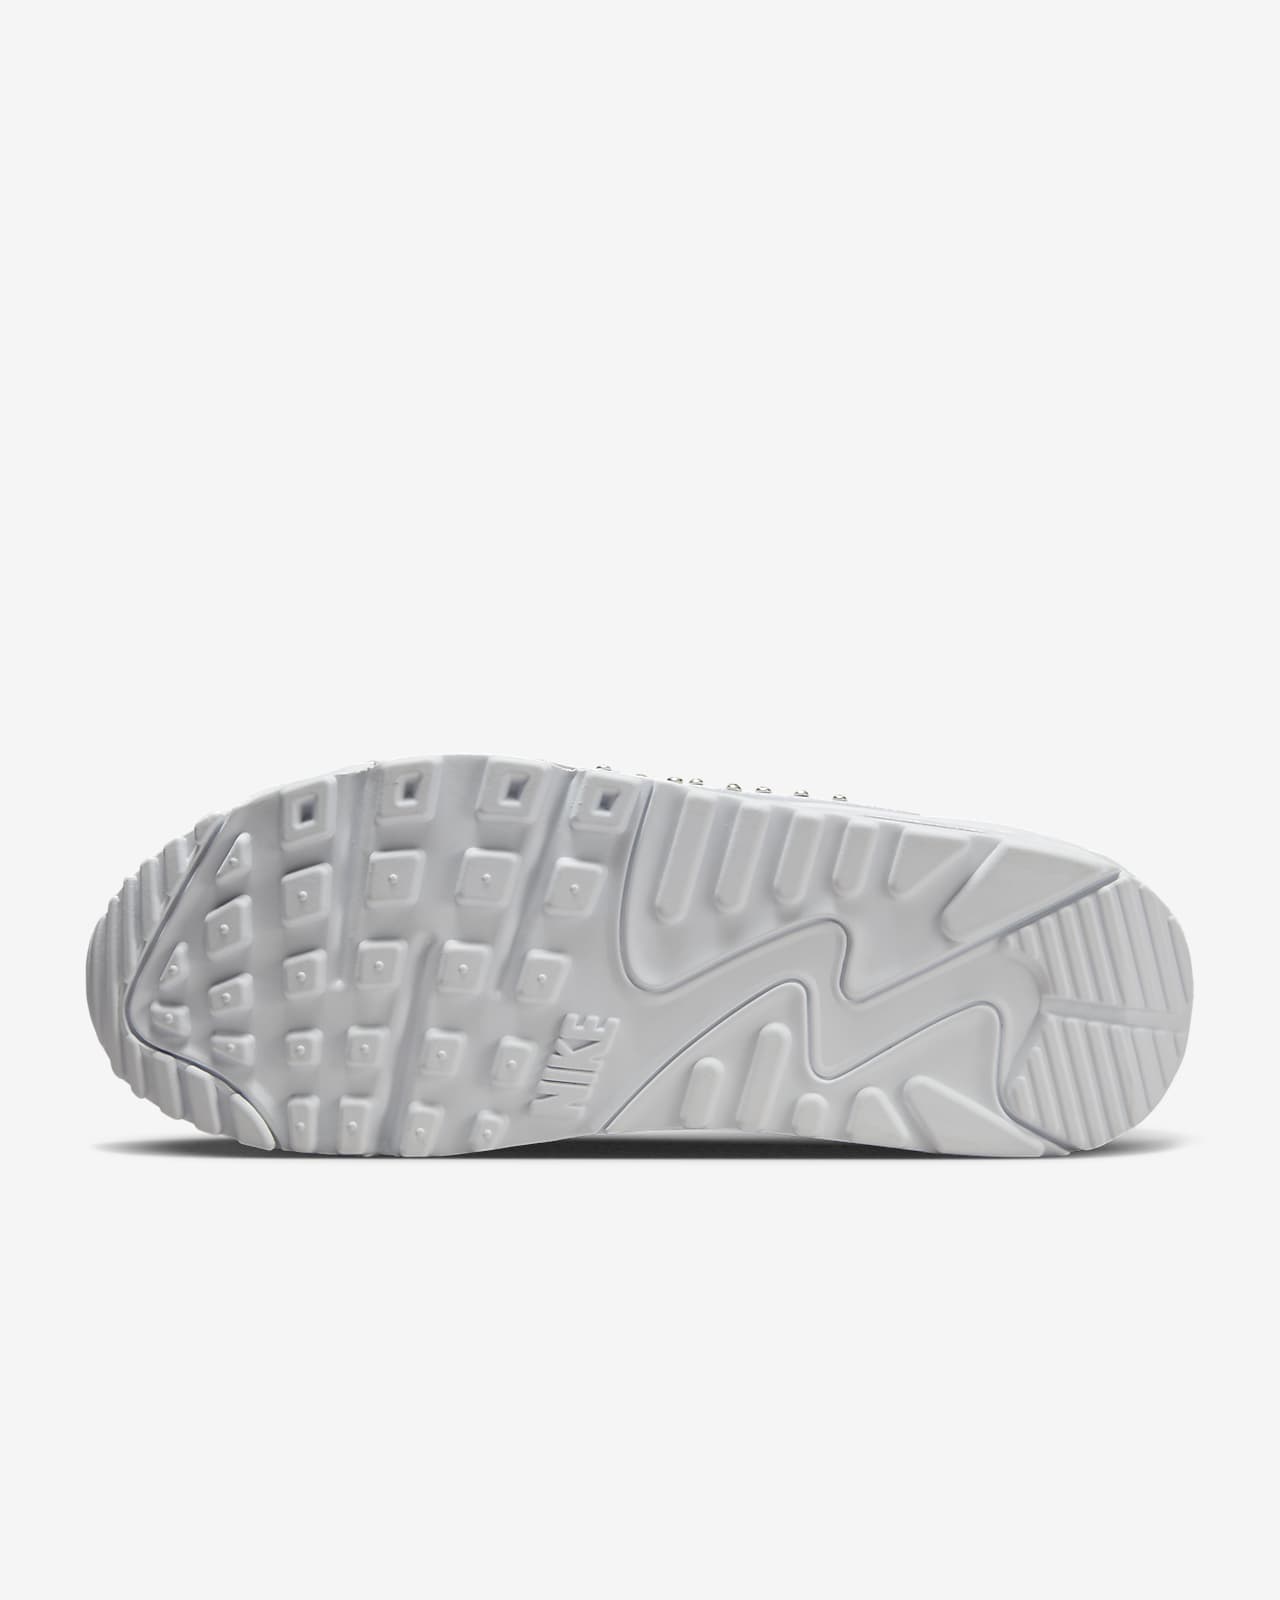 Chaussures homme Nike Air max 90 Futura - Taille 42 - 44,5, Noir